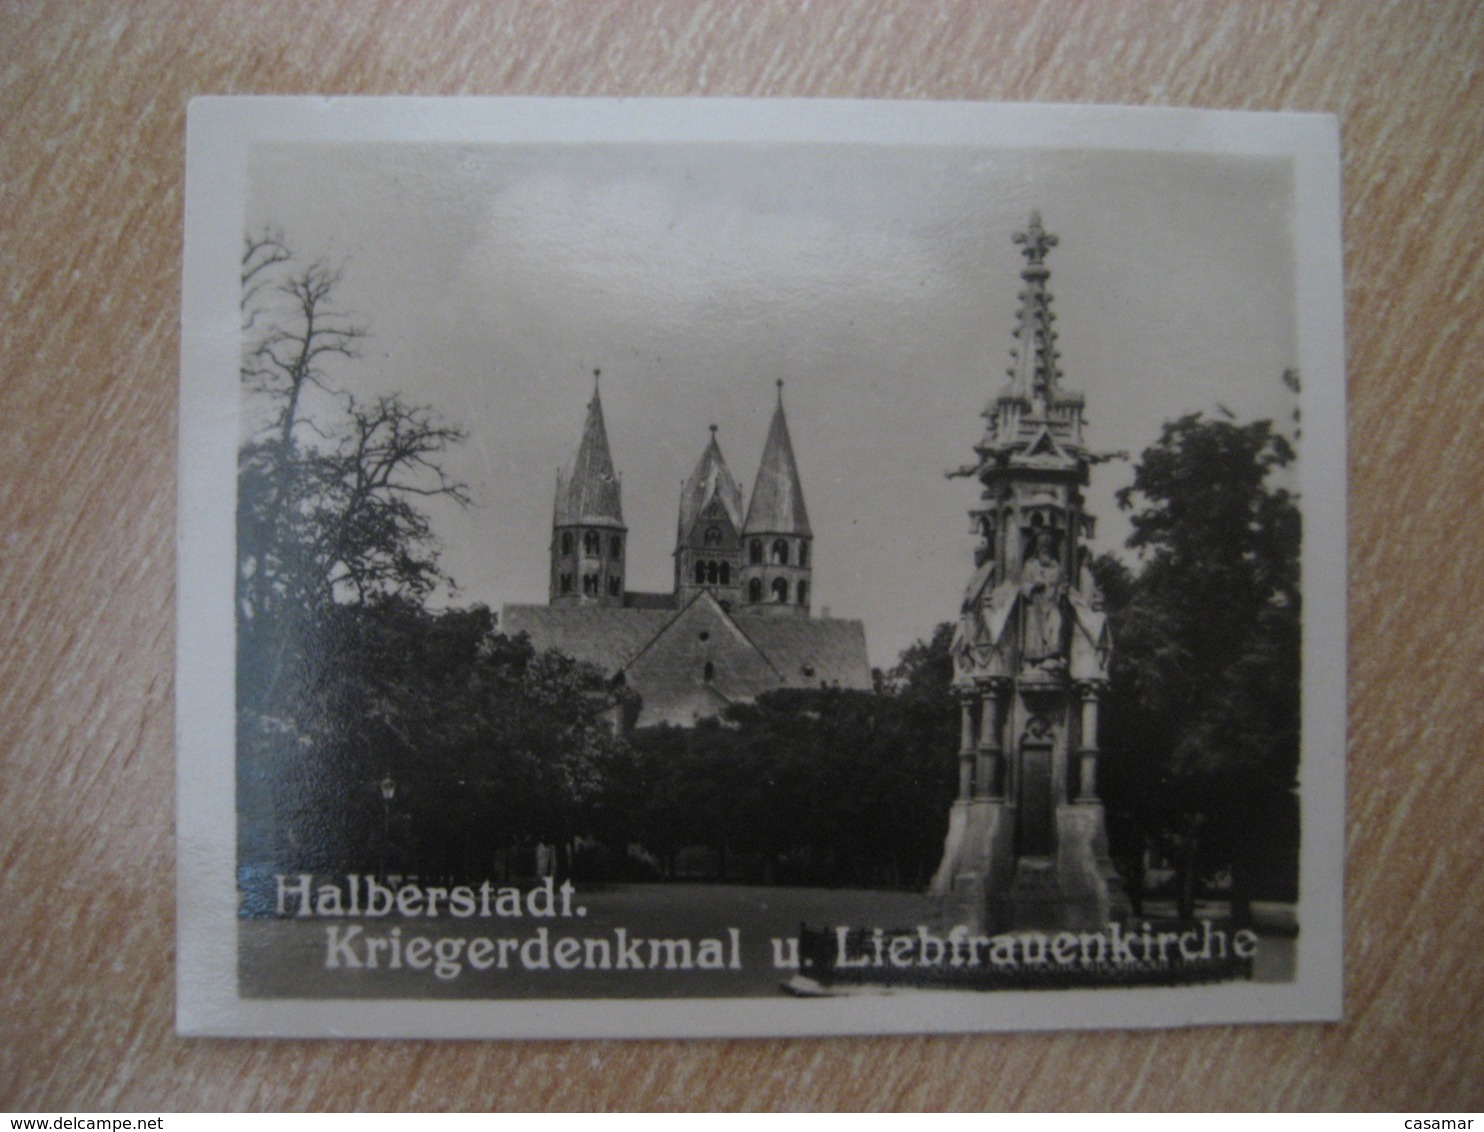 HALBERSTADT Kriegerdenkmal Liebfrauenkirche Bilder Card Photo Photography (4x5,2cm) Harz Mountains GERMANY 30s Tobacco - Non Classés